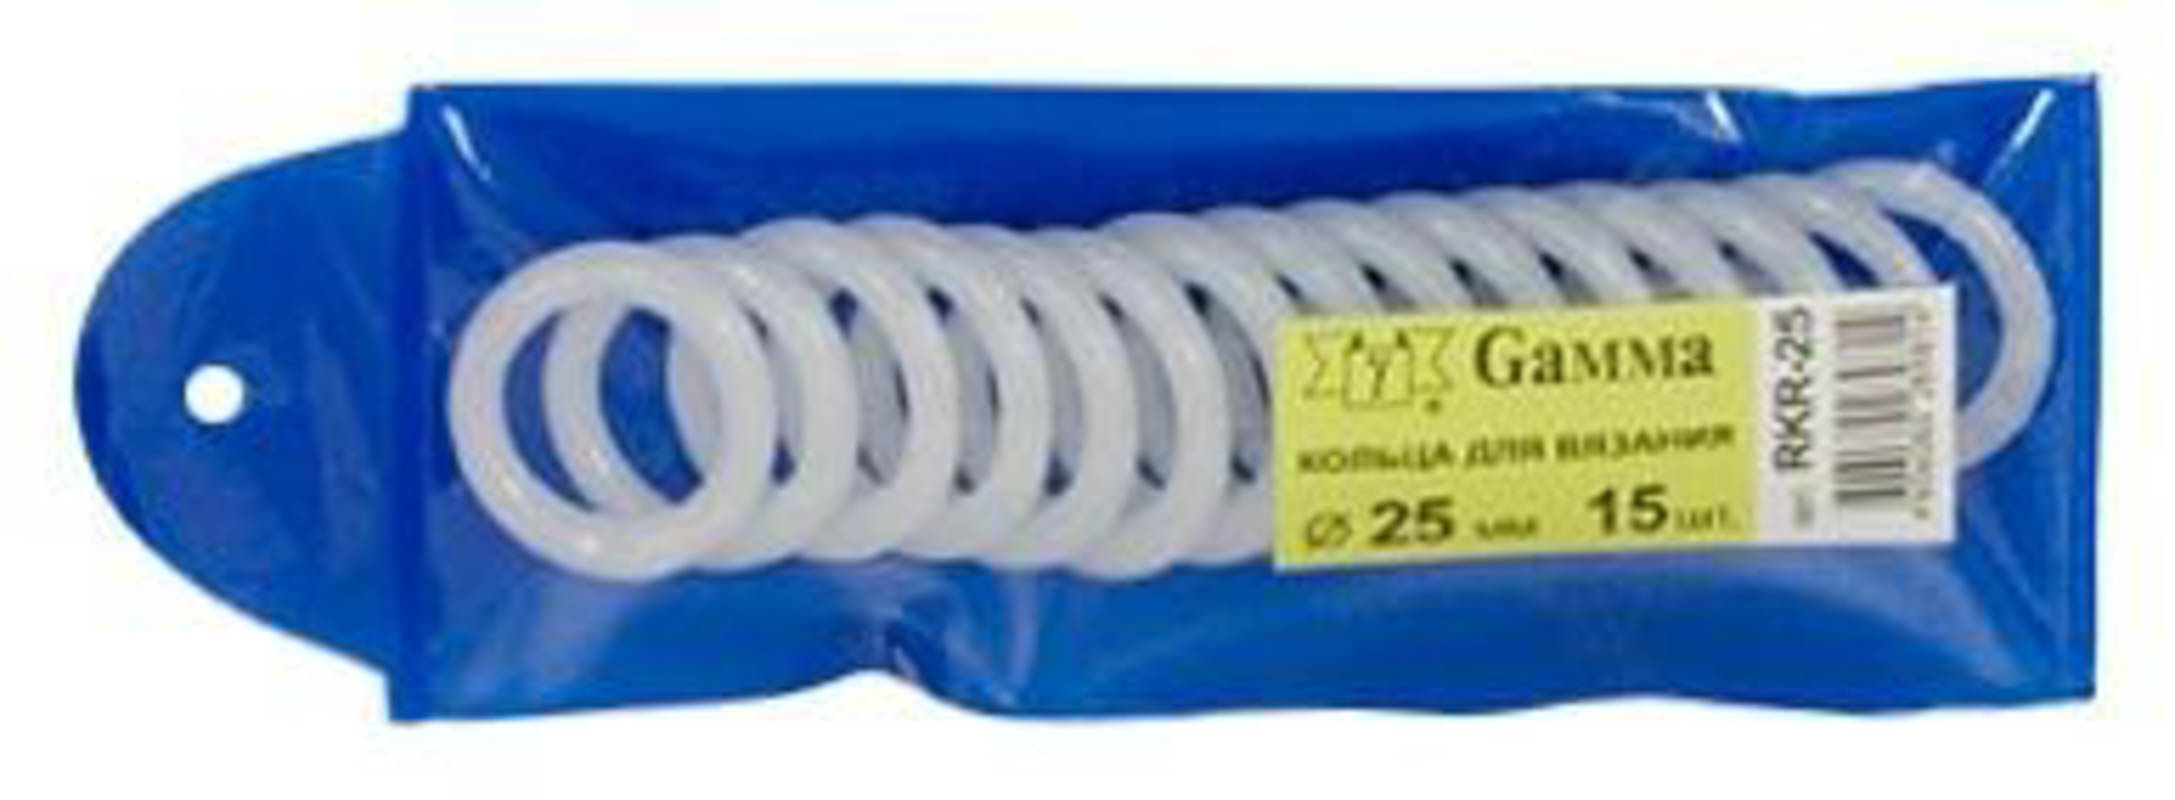 Кольца для вязания «Gamma» RKR-25 пластик, d=25 мм